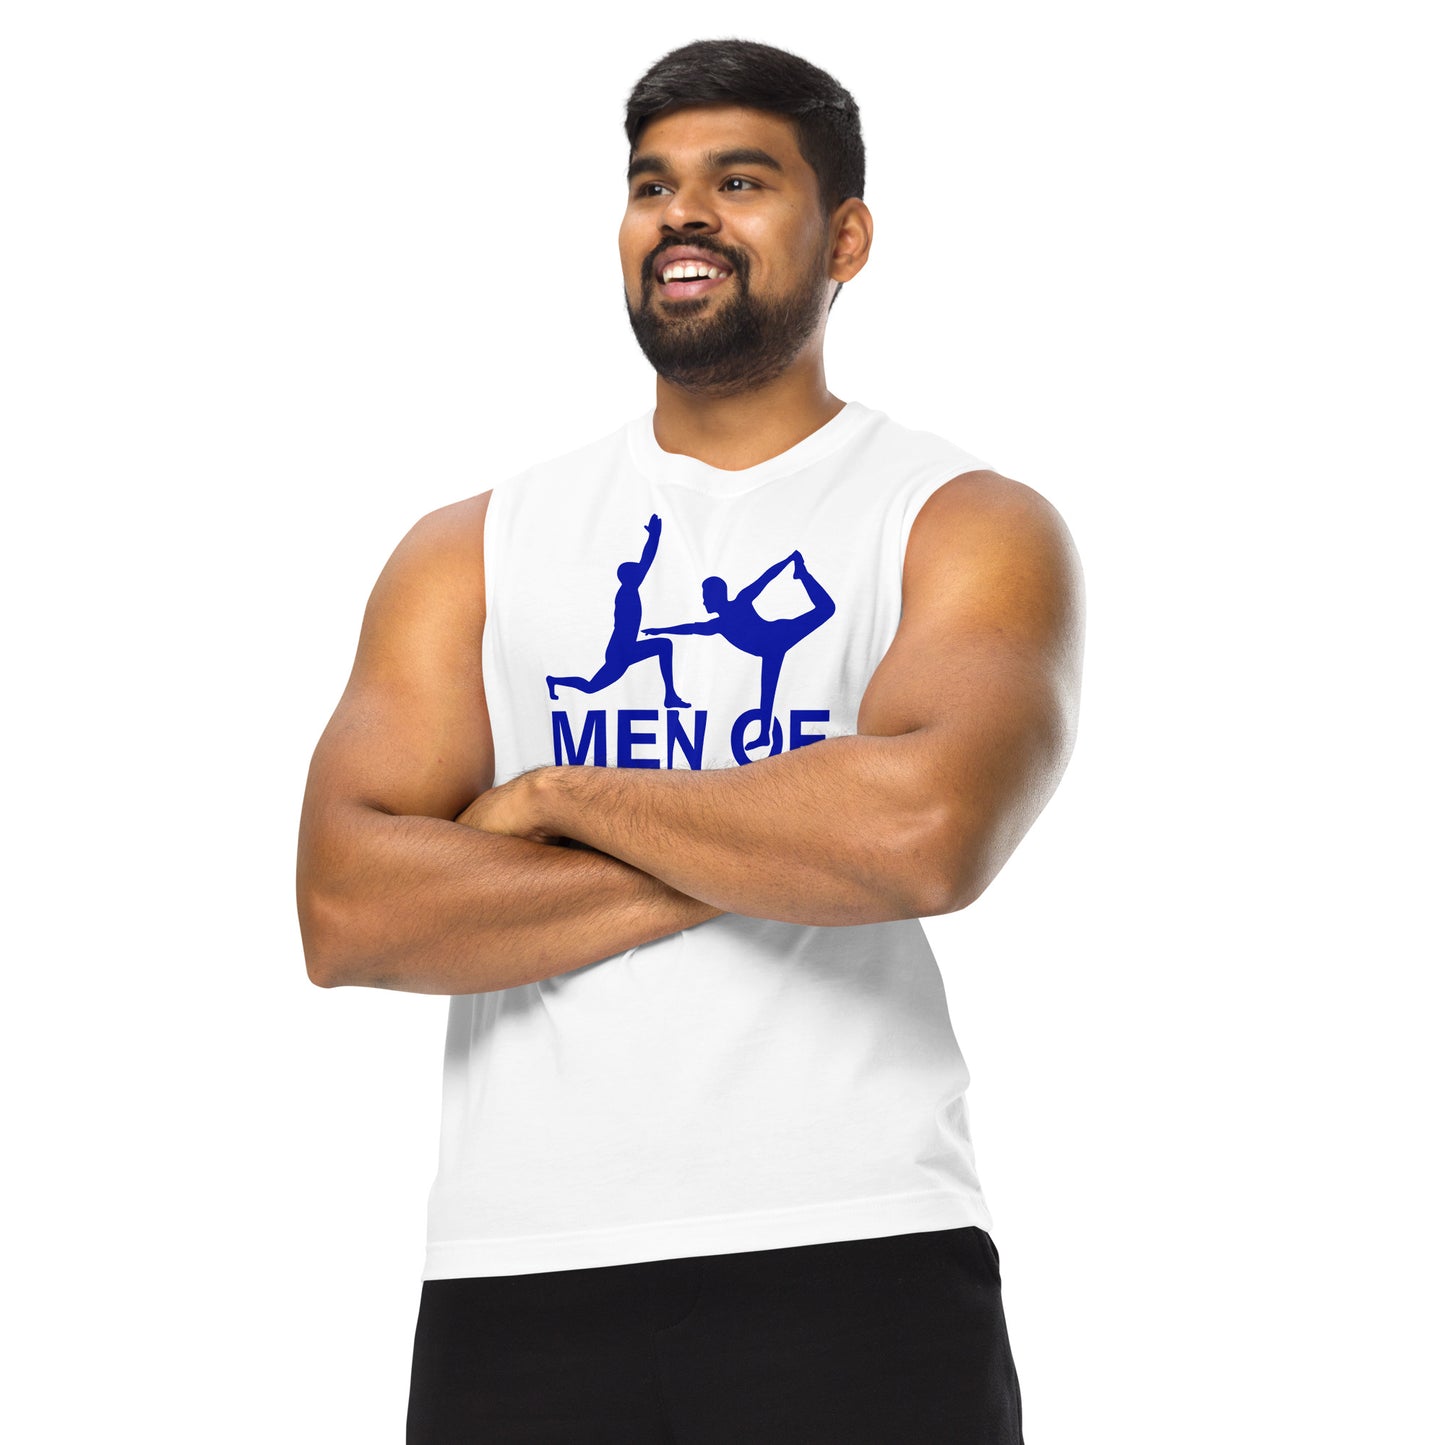 Men of Yoga Muscle Shirt